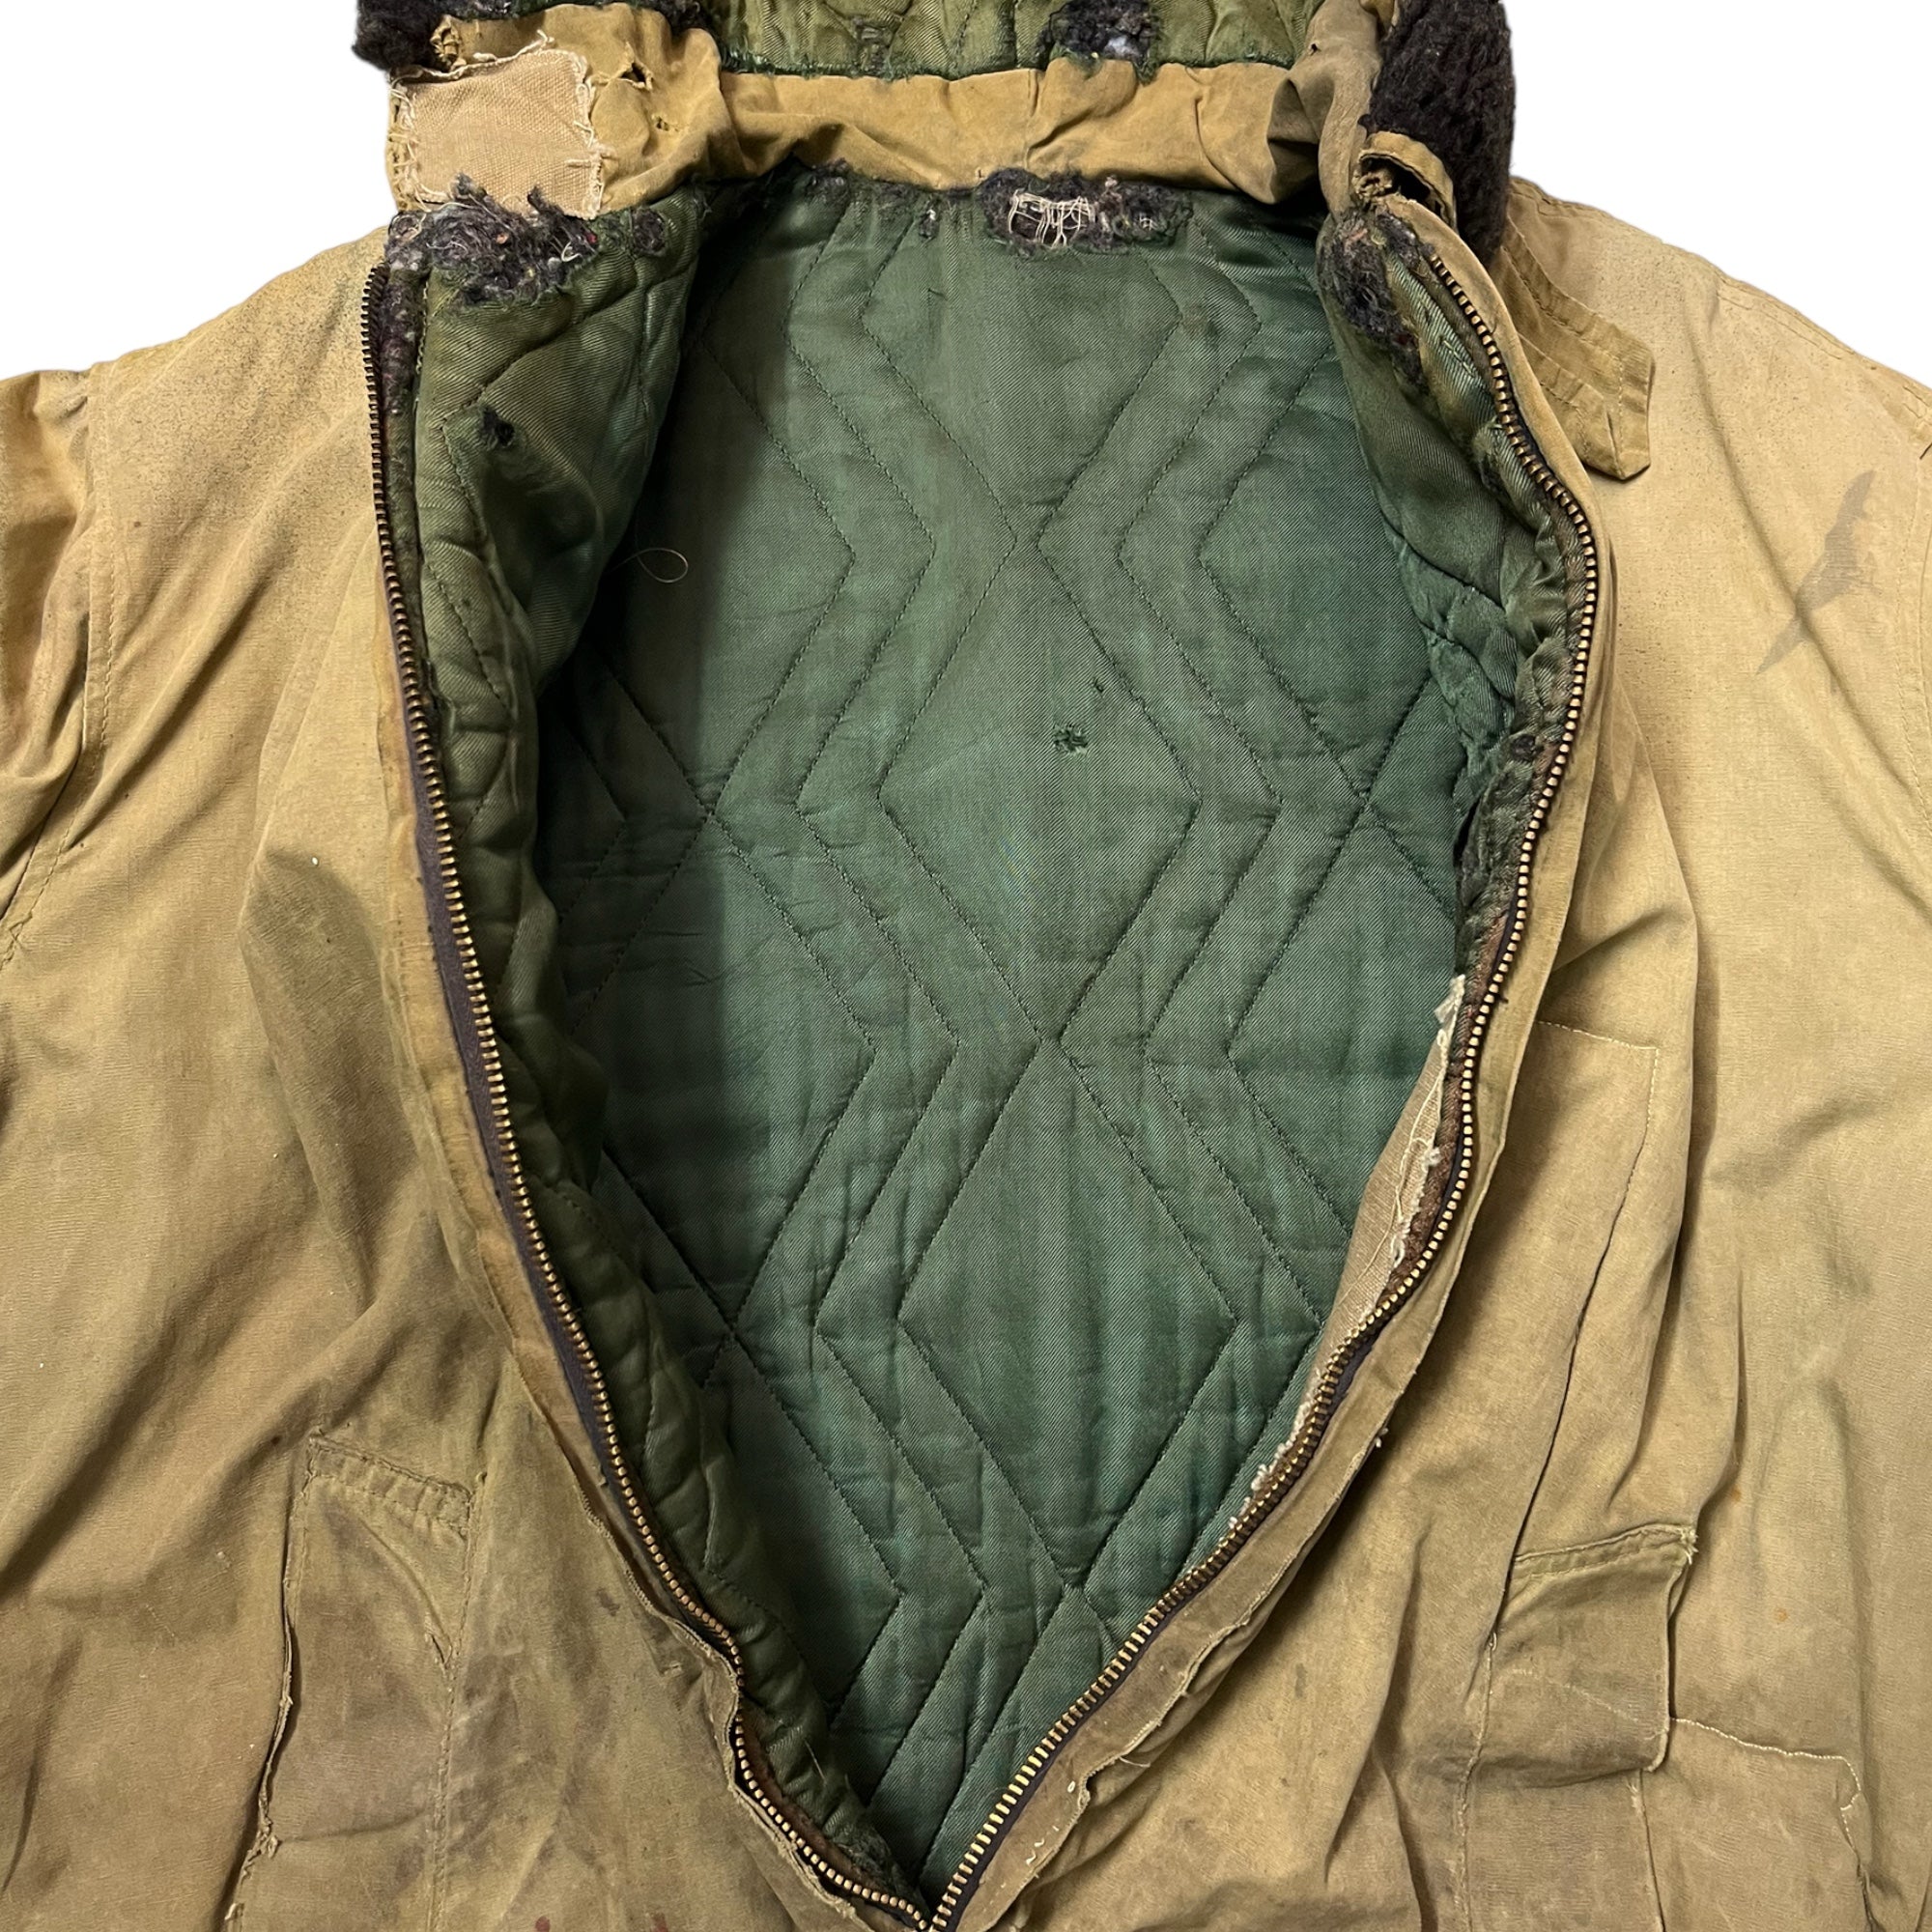 1950s/60s Distressed Civilian Deck Jacket with Denim ‘Leg’ Repaired Sleeves - Dirty Khaki Tan - M/L